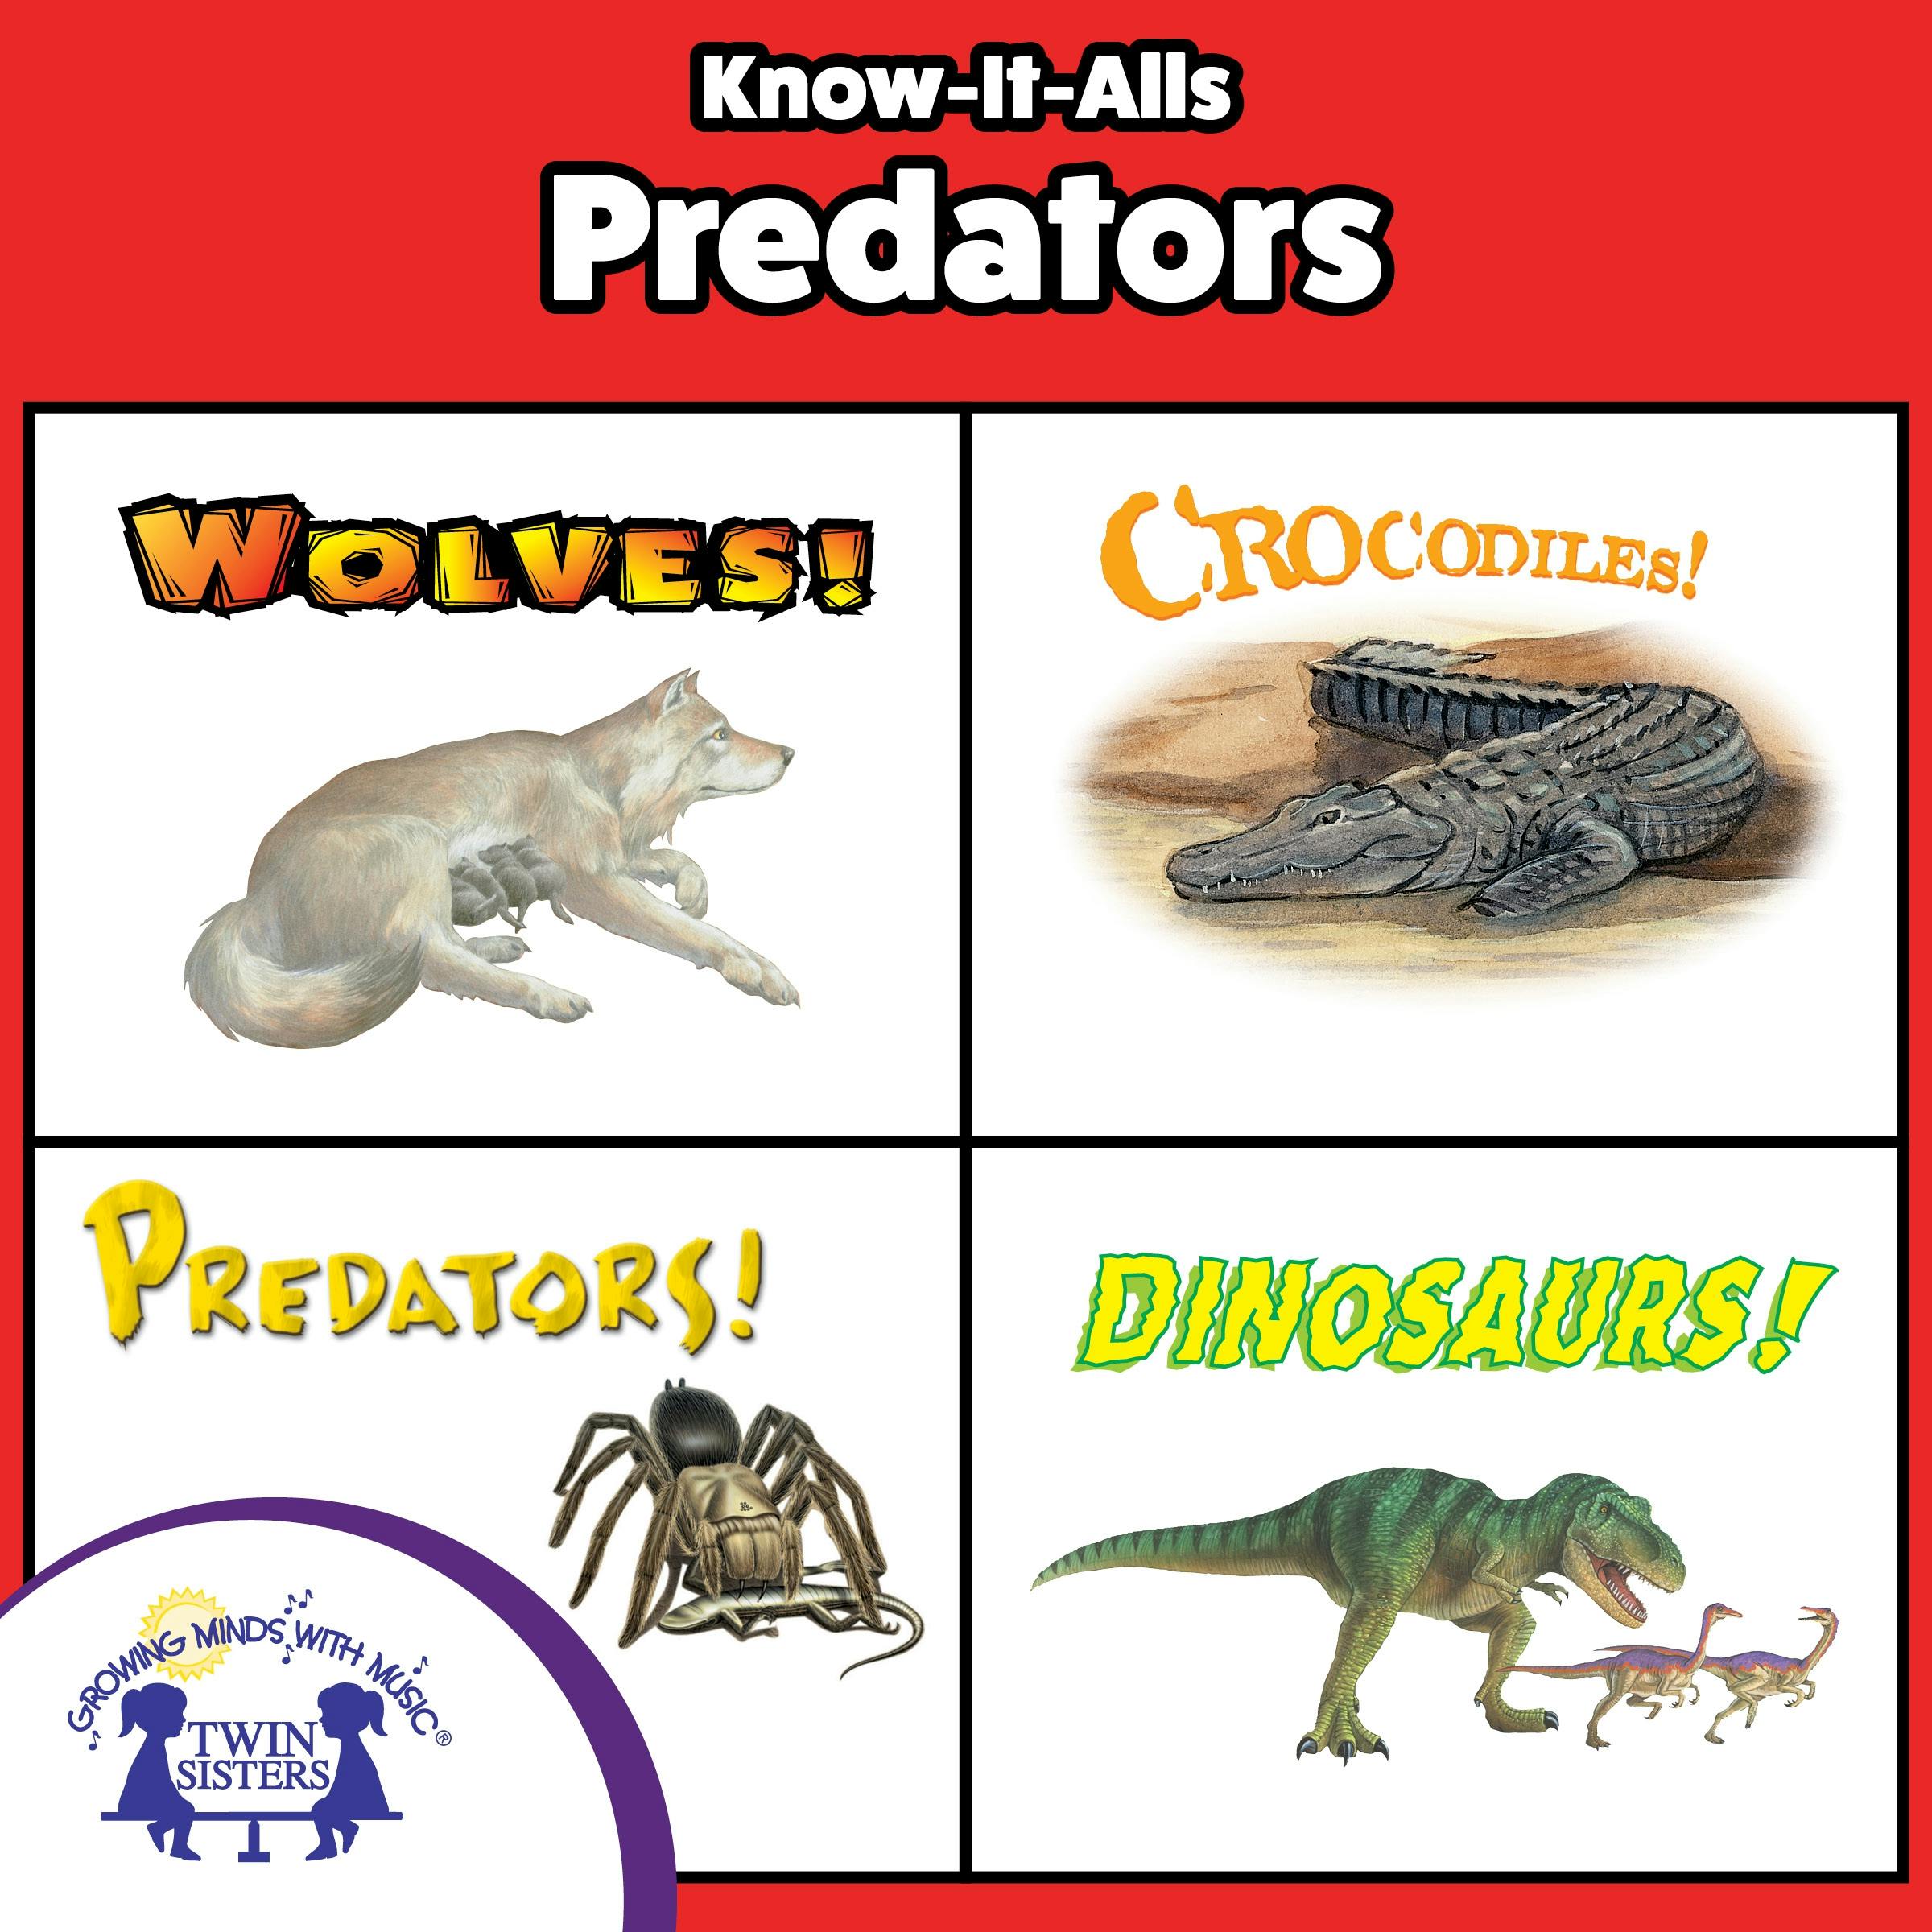 Know-It-Alls! Predators: Growing Minds with Music - Jay Johnson, Kenn Goin, Irene Trimble, Christopher Nicholas